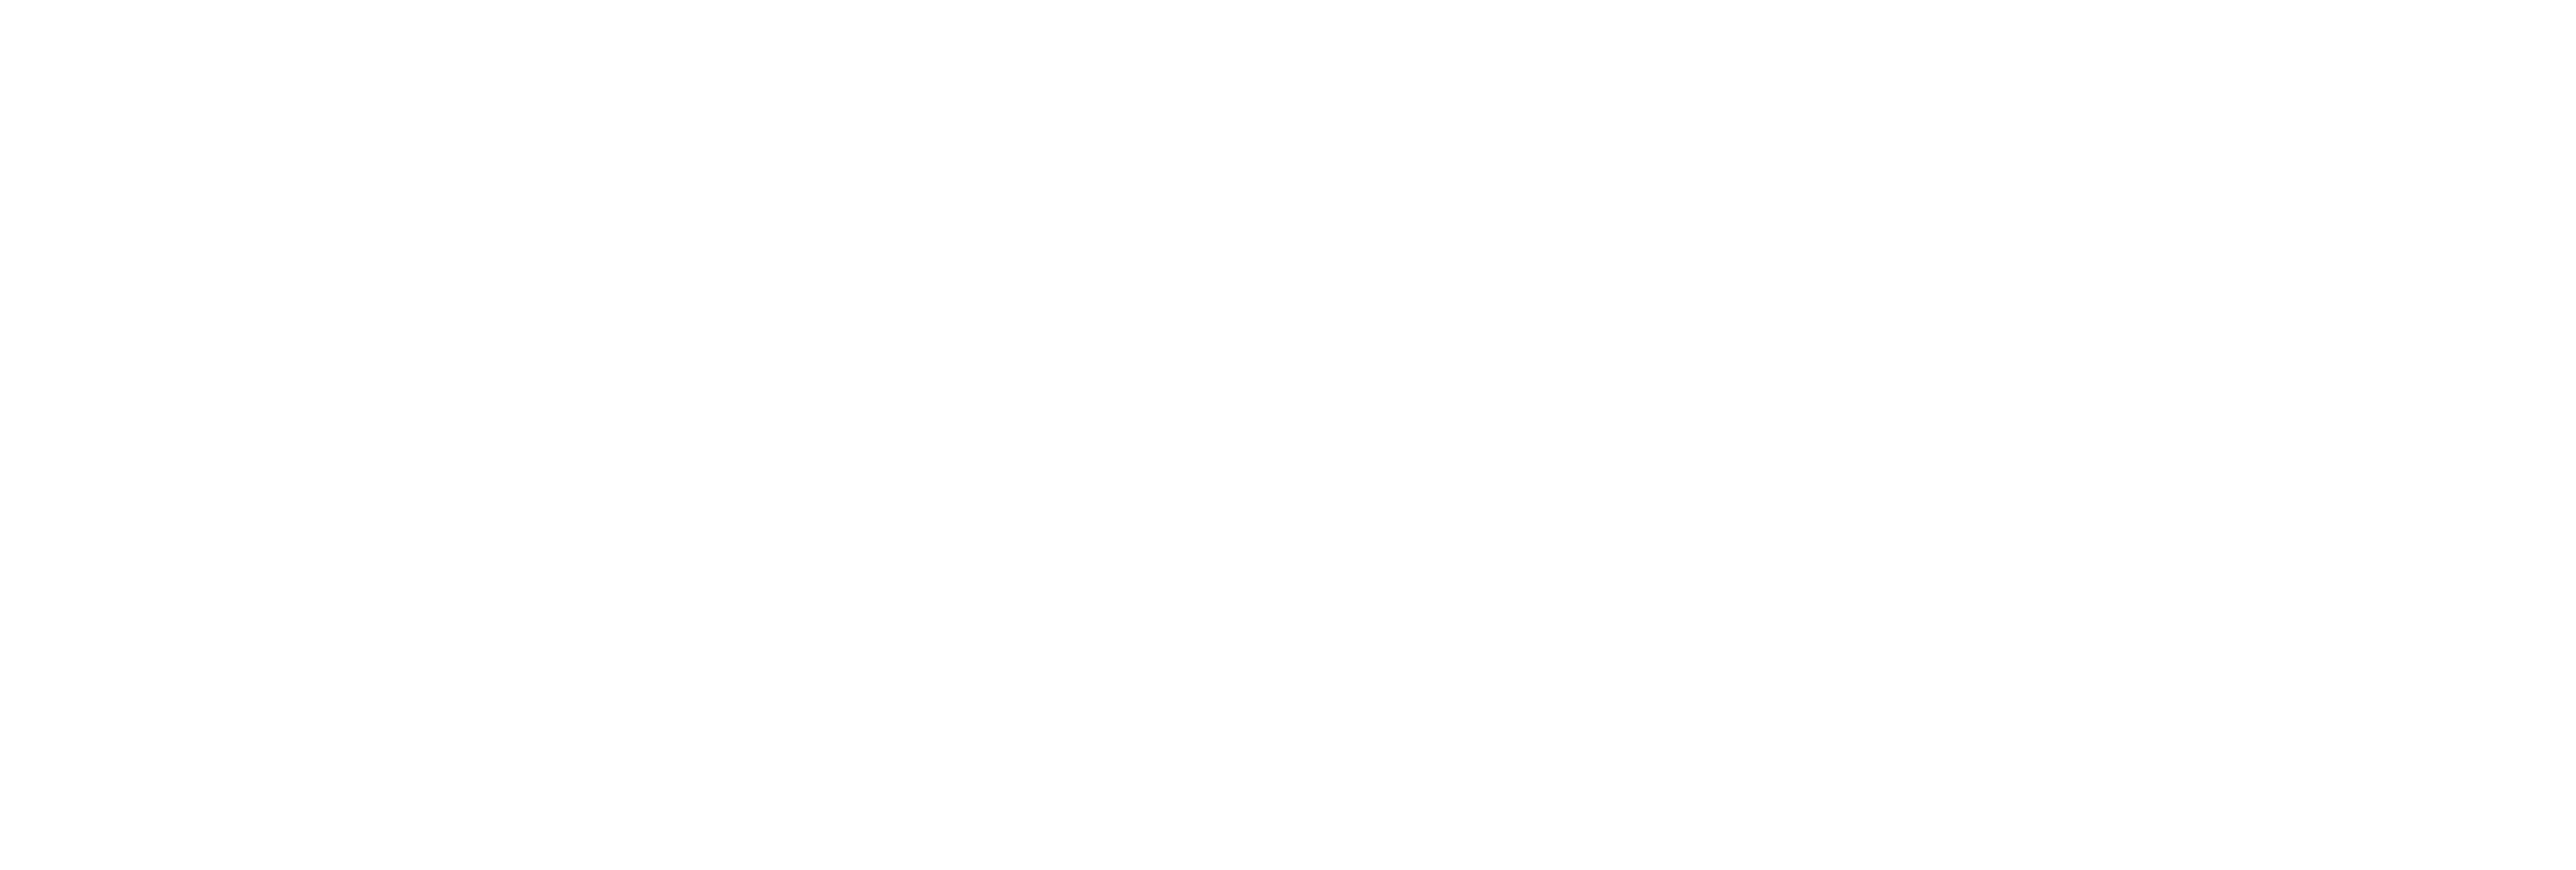 AniCura Tierarztpraxis Aspern logo